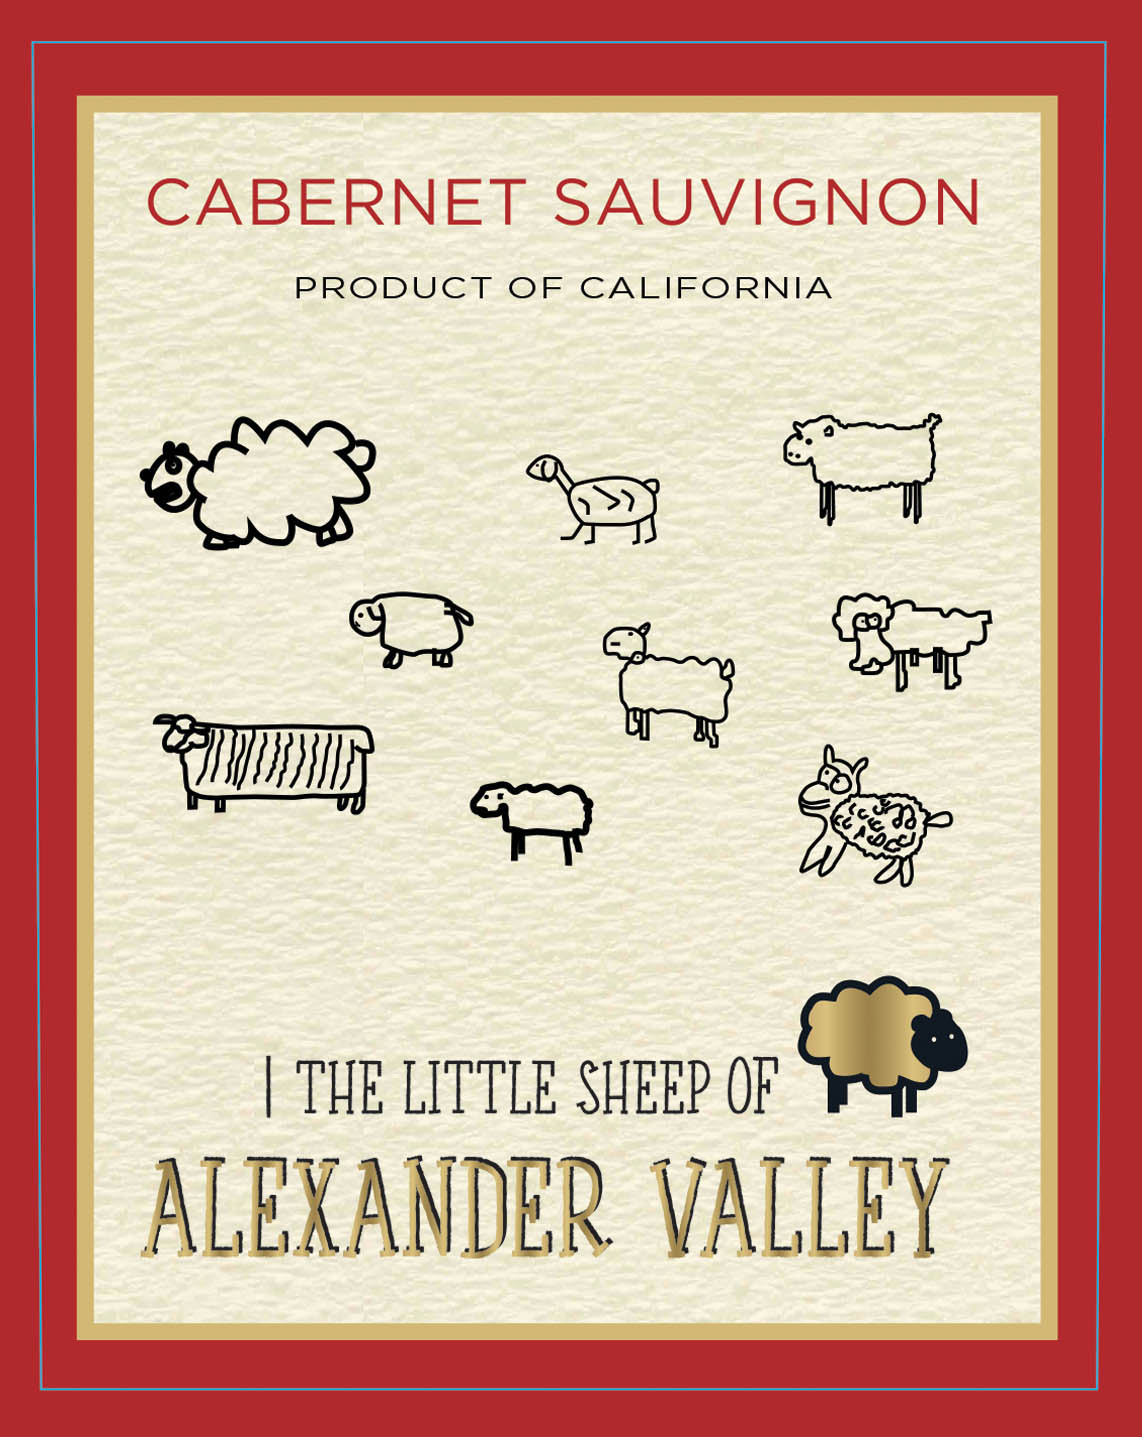 The Little Sheep of Alexander Valley - Cabernet Sauvignon label